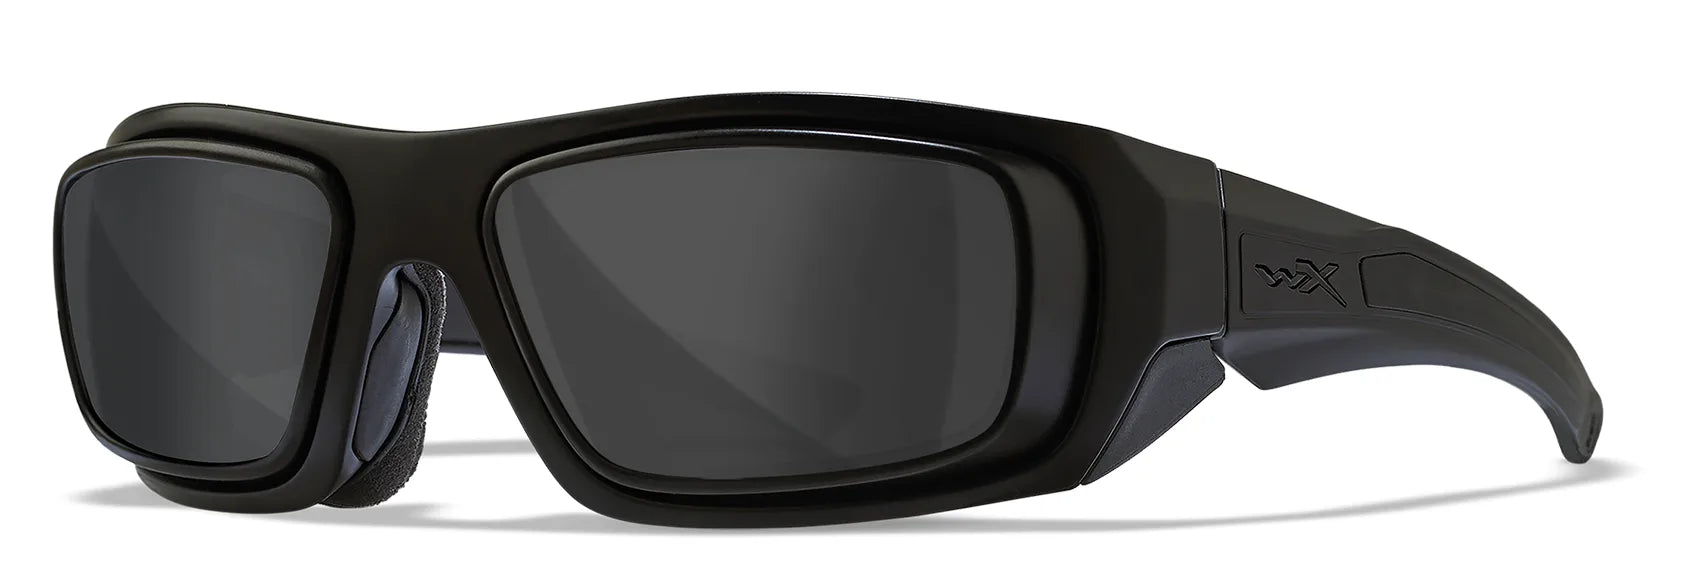 Wiley X Enzo Safety Glasses Matte Black with Rx Rim / Smoke Grey